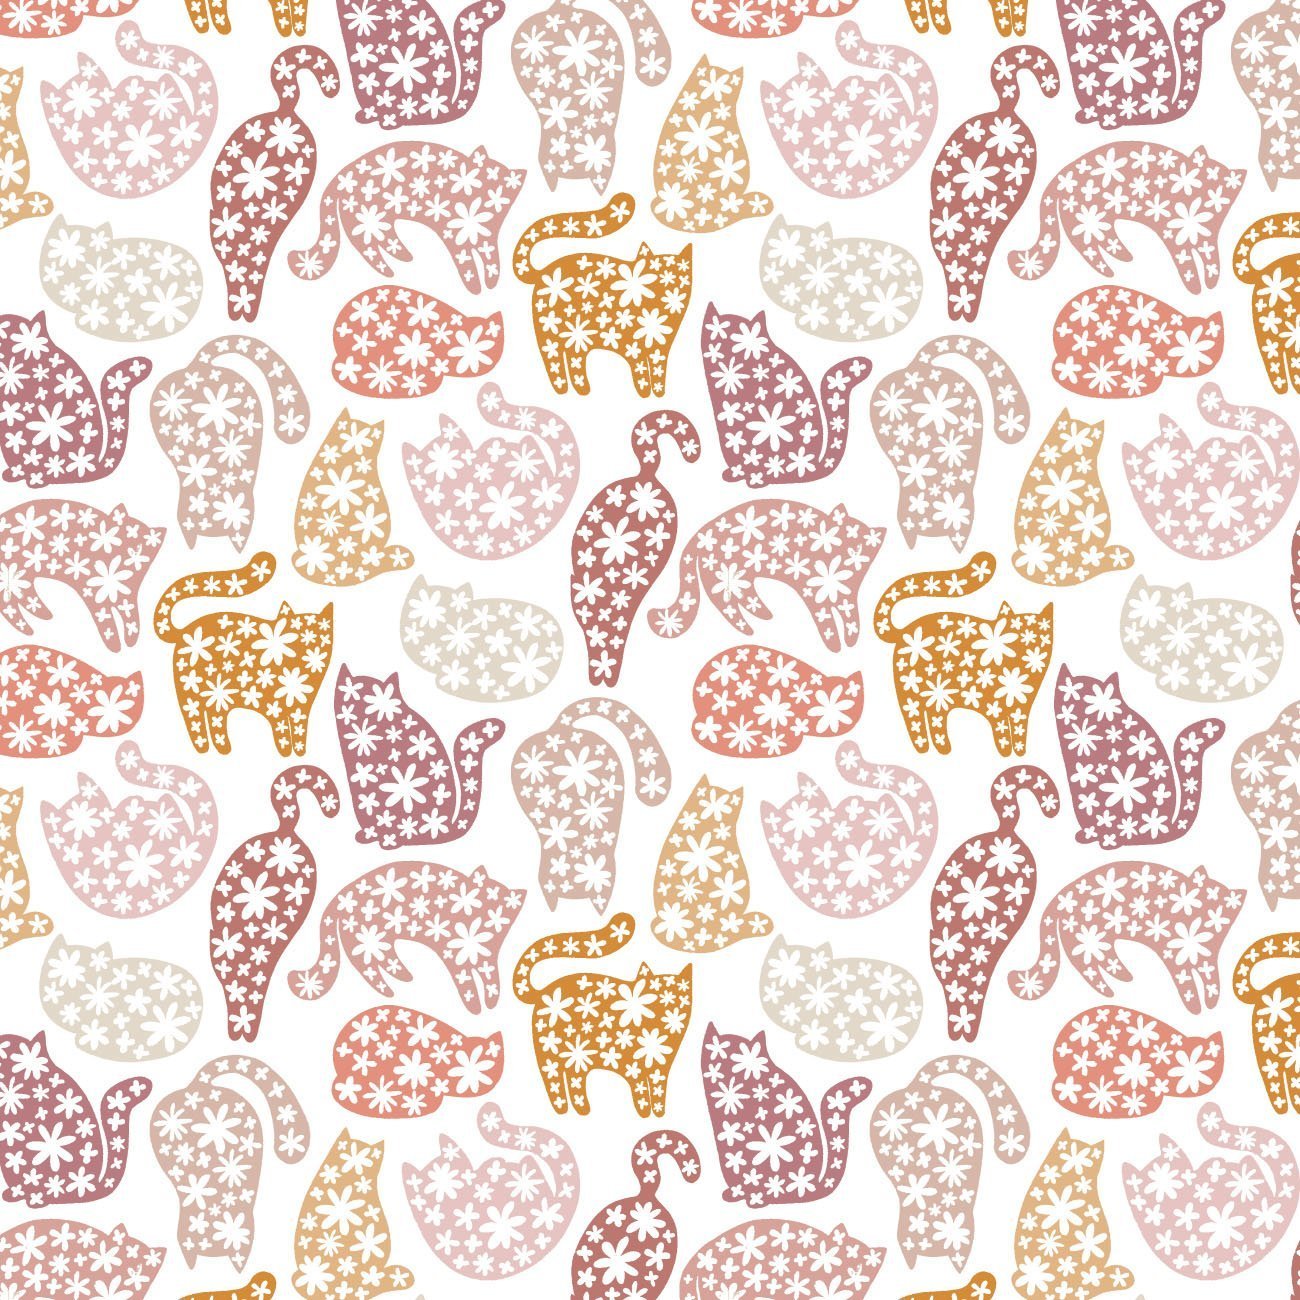 Smitten Kittens - Floral Kitten Poses